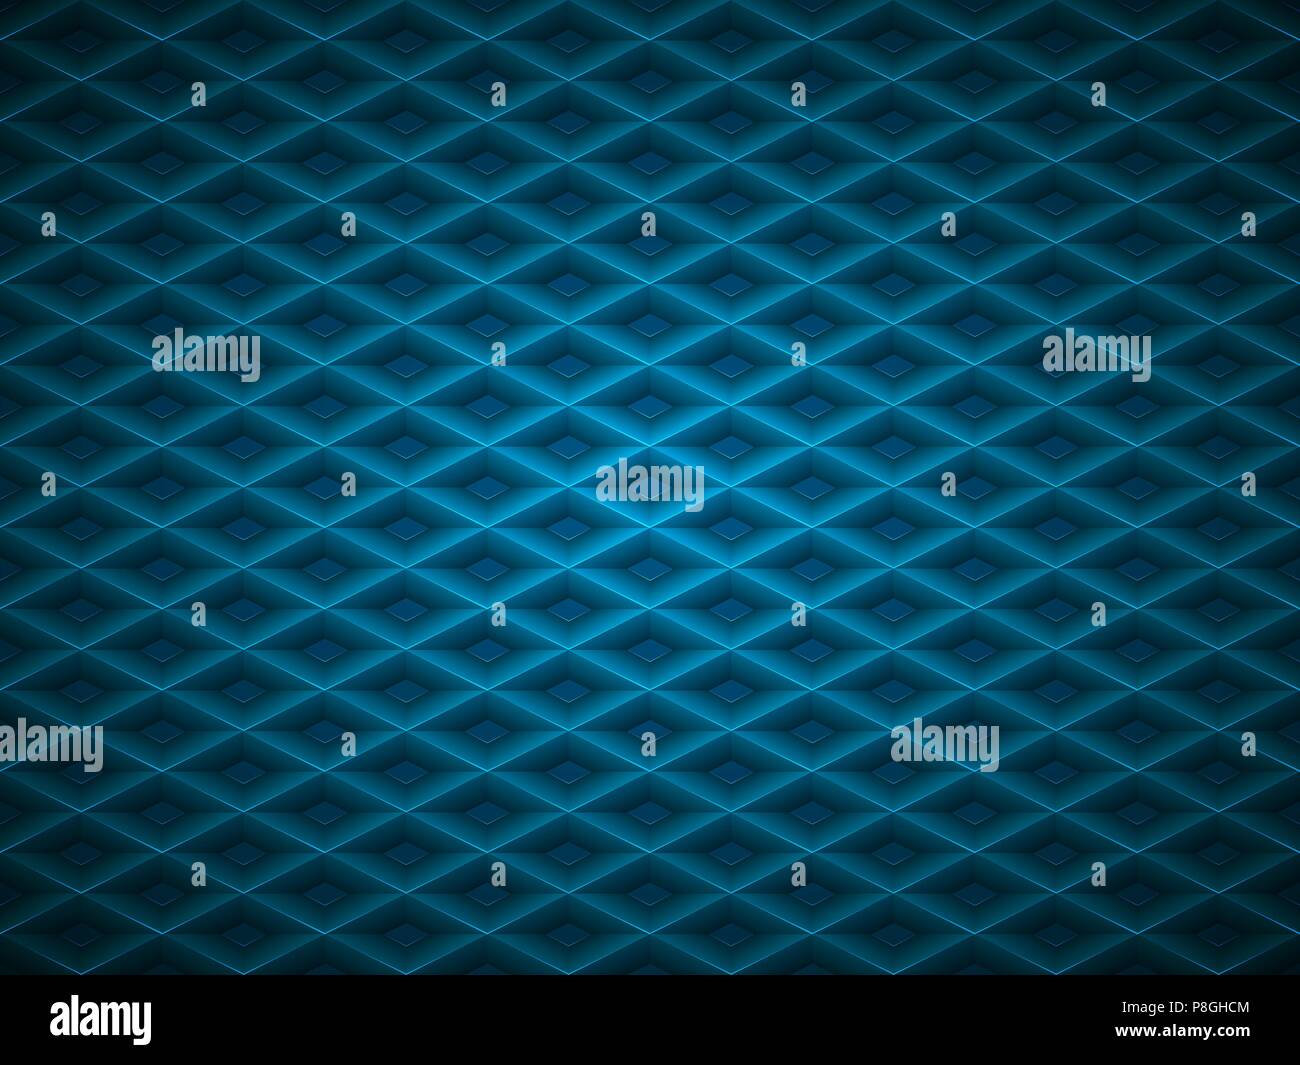 Vector blue embossed pattern plastic grid background. Technology diamond shape cell geometric pattern. Stock Vector